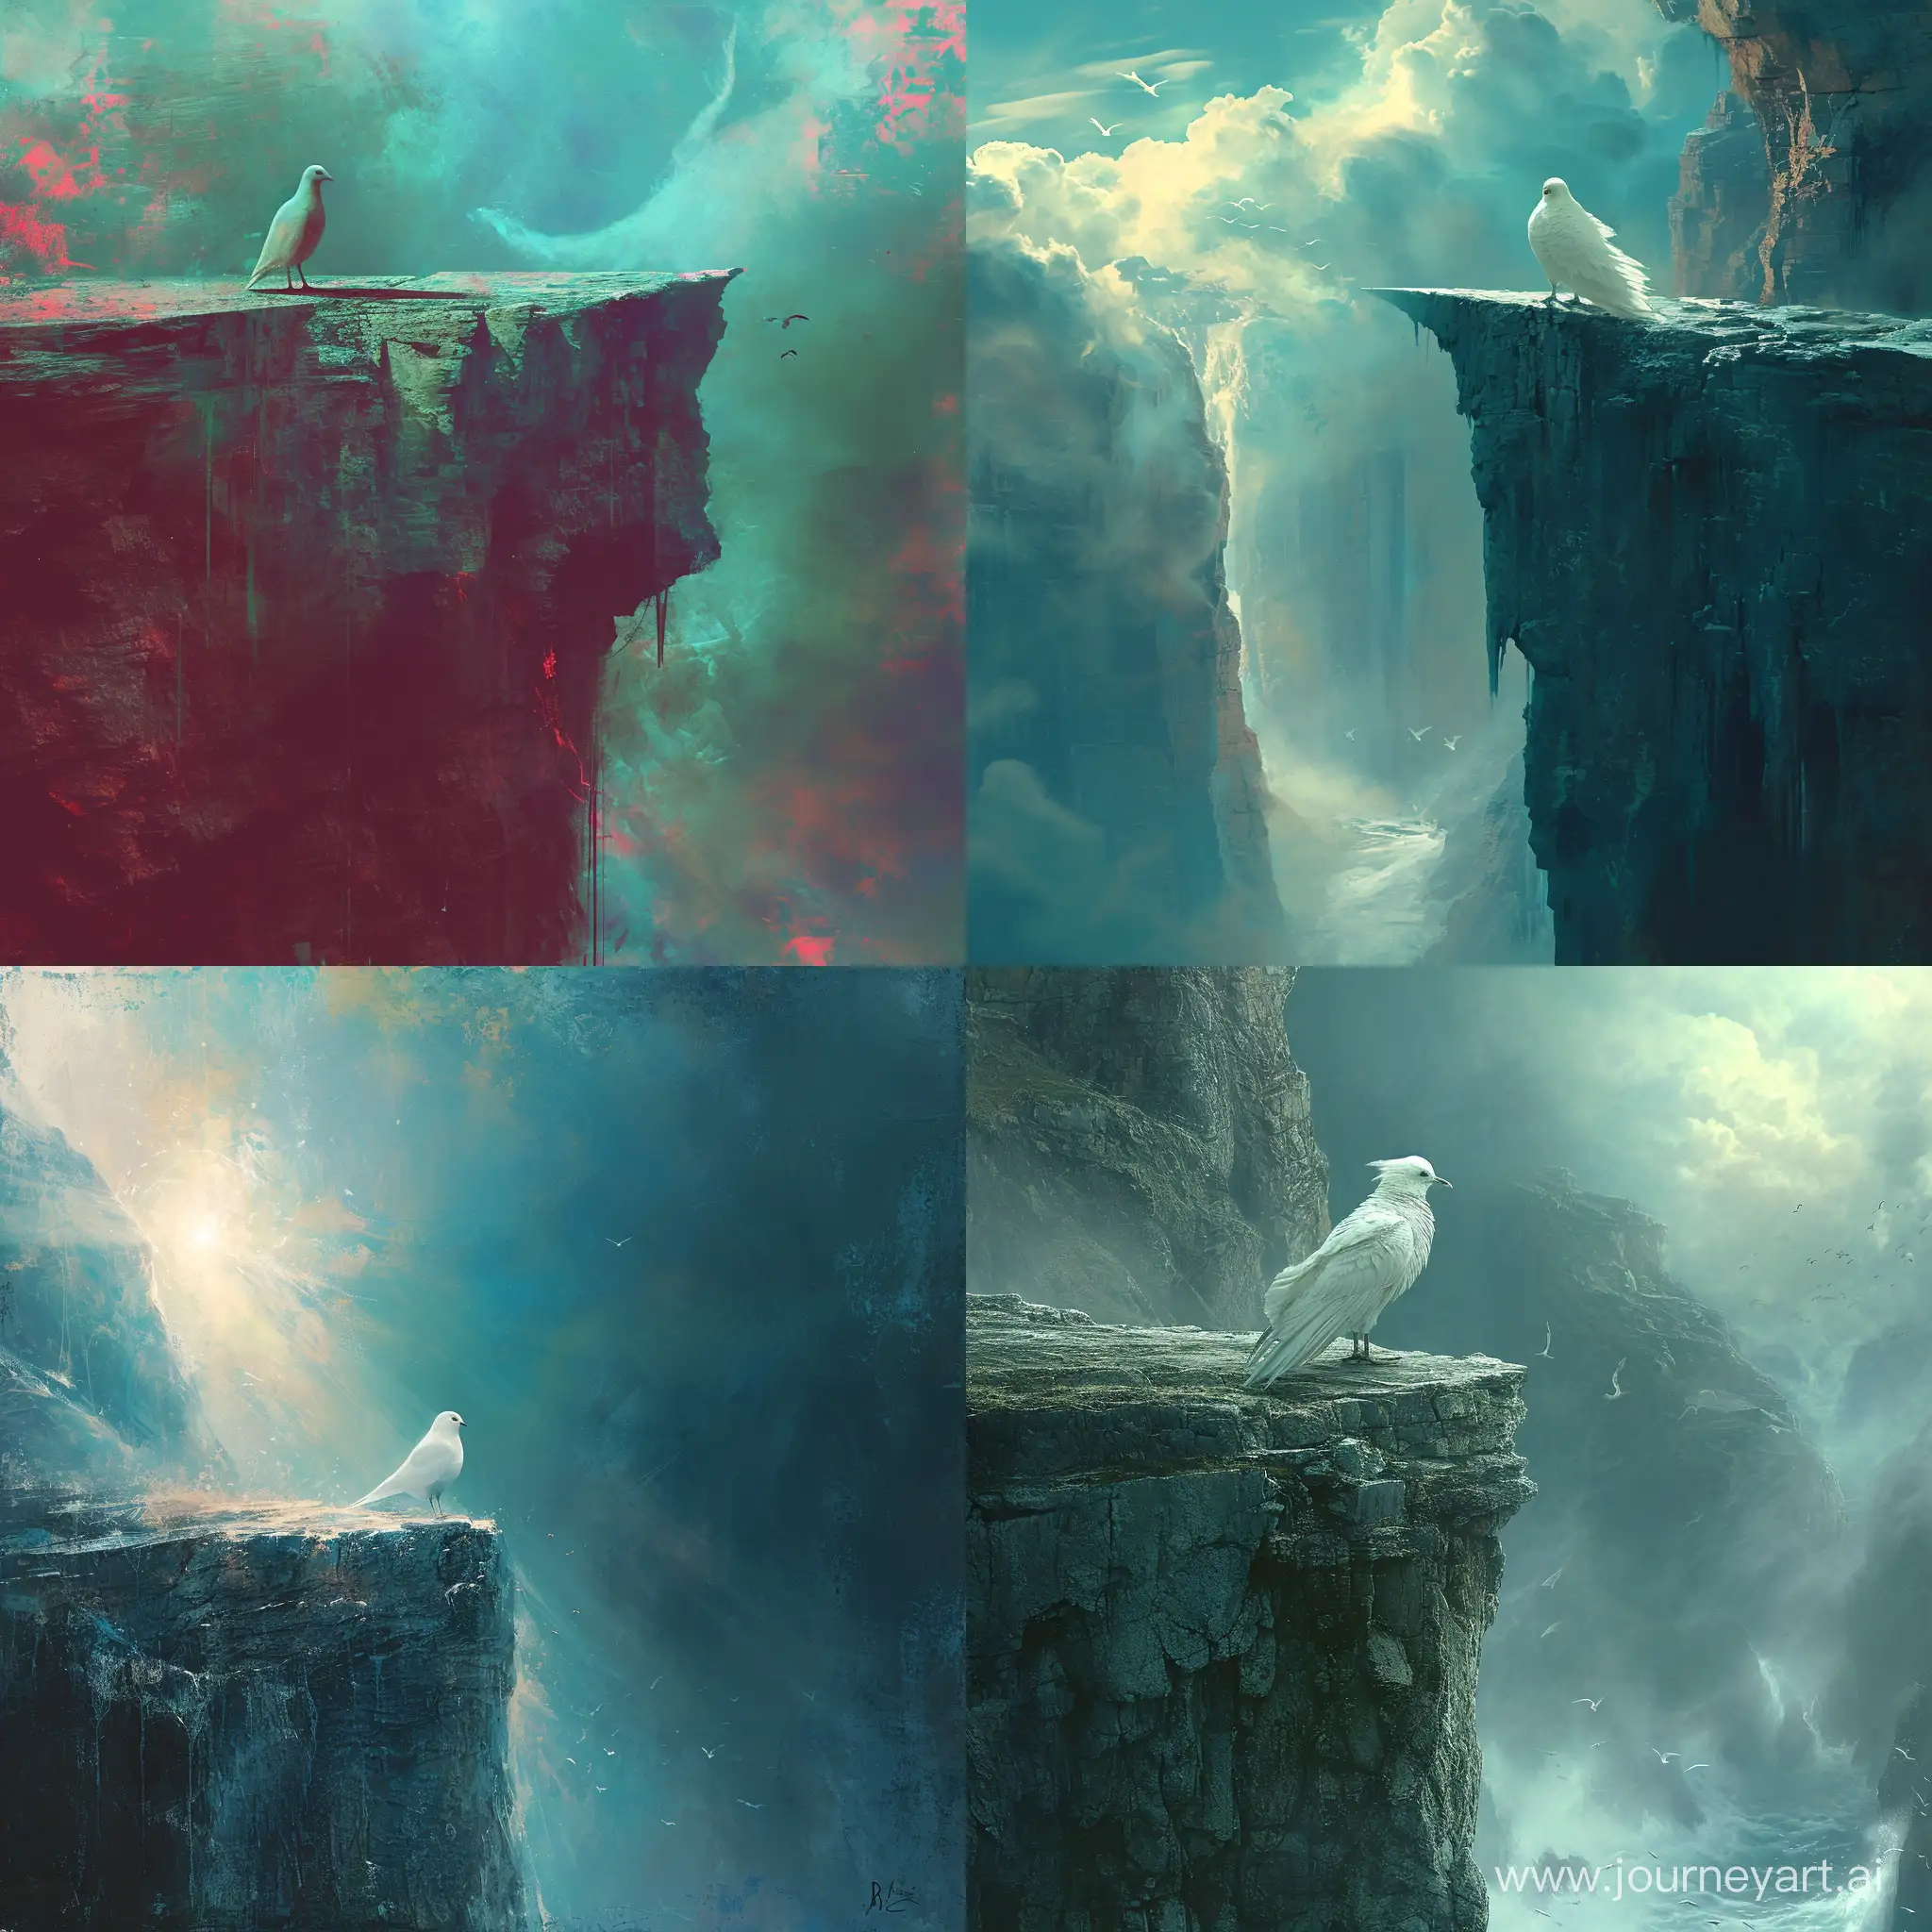 Surreal-8K-Fantasy-Art-Ethereal-White-Dove-on-Cliff-Edge